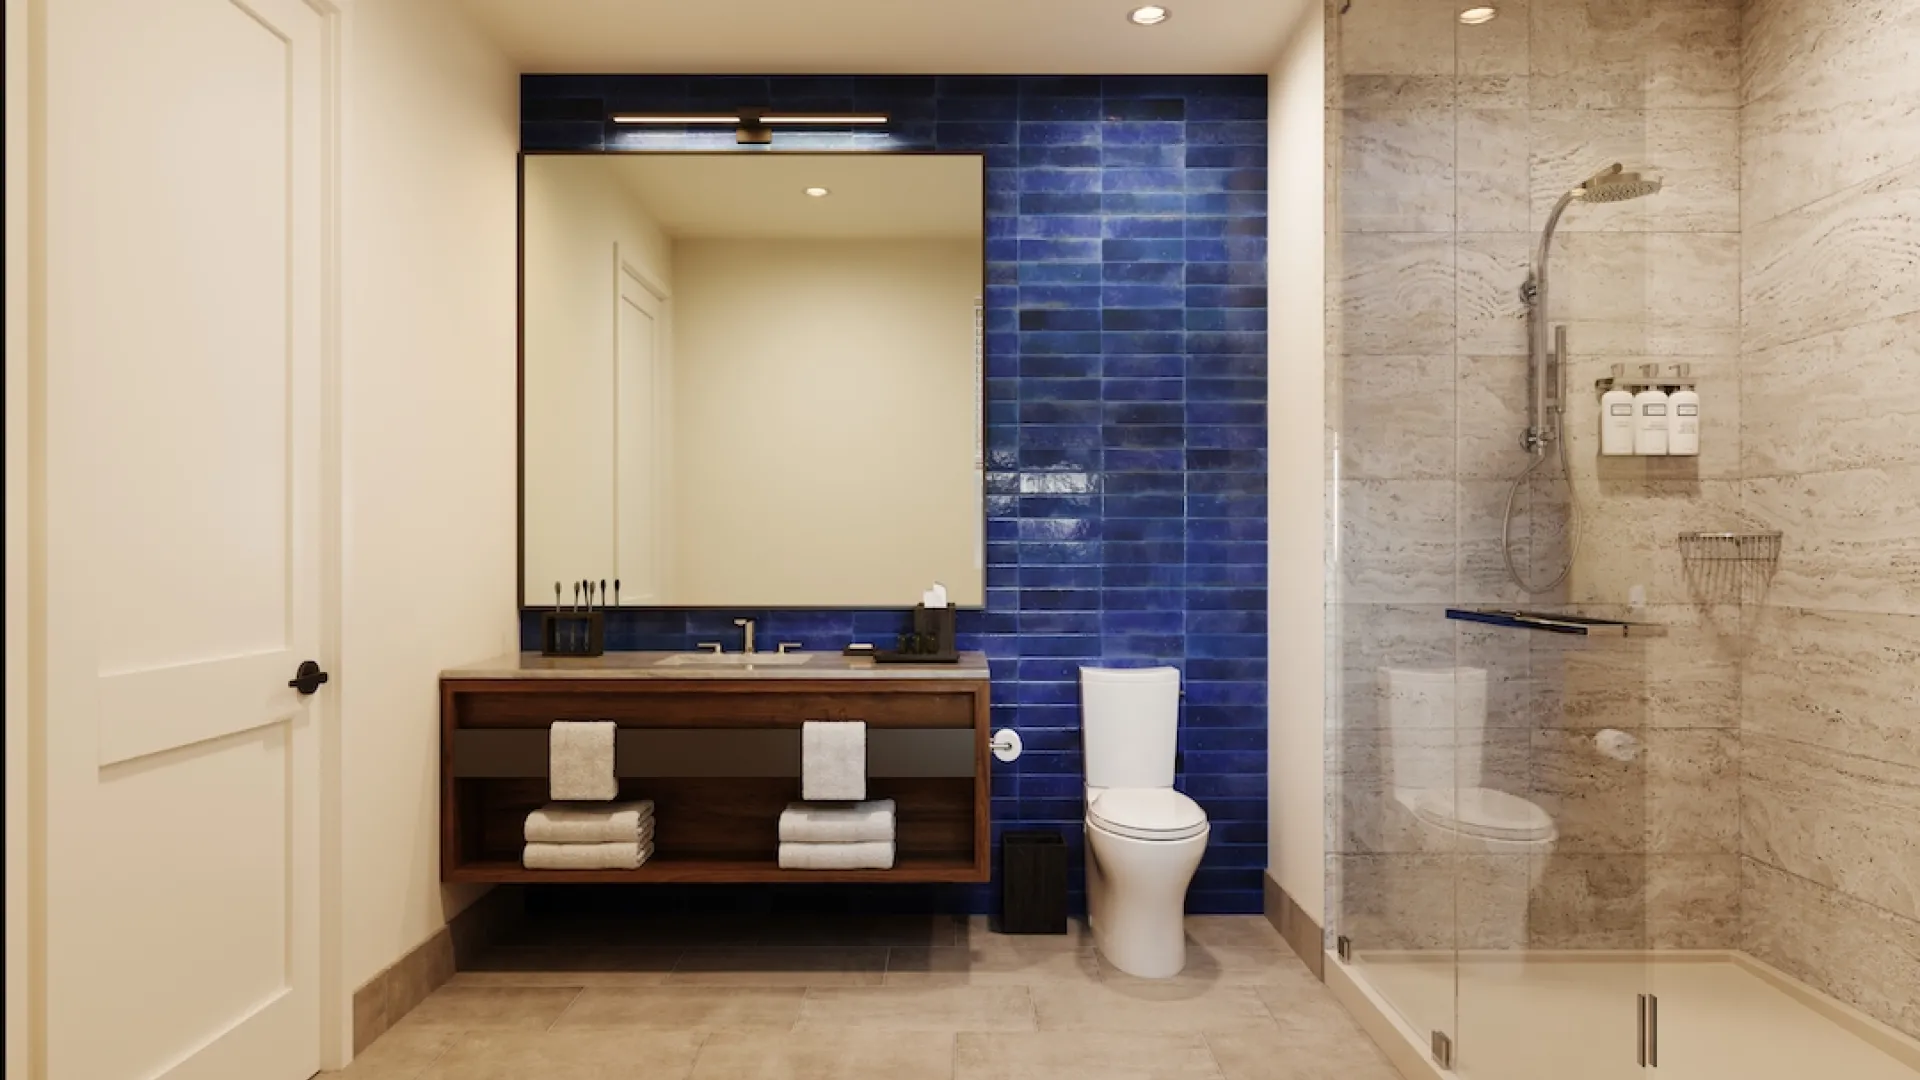 Interior shot of 11 bedroom guest bathroom with wooden vanity, blue marble backsplash, sliding glass shower doors